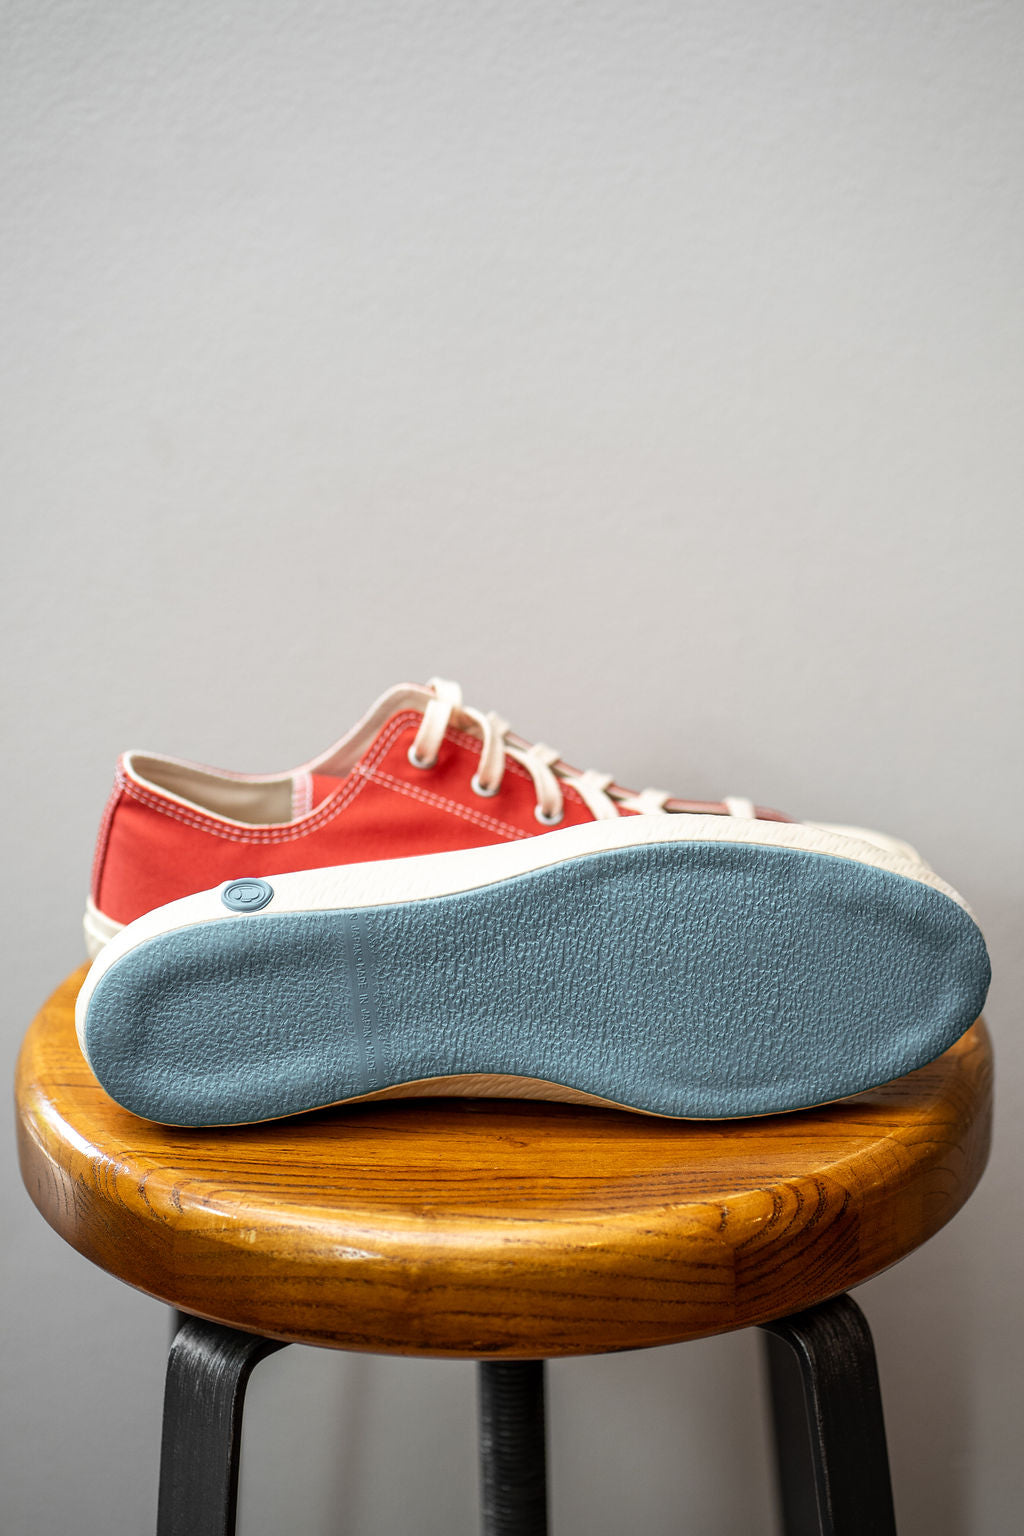 Shoes Like Pottery SLP01 JP Low Top Sneaker- Red